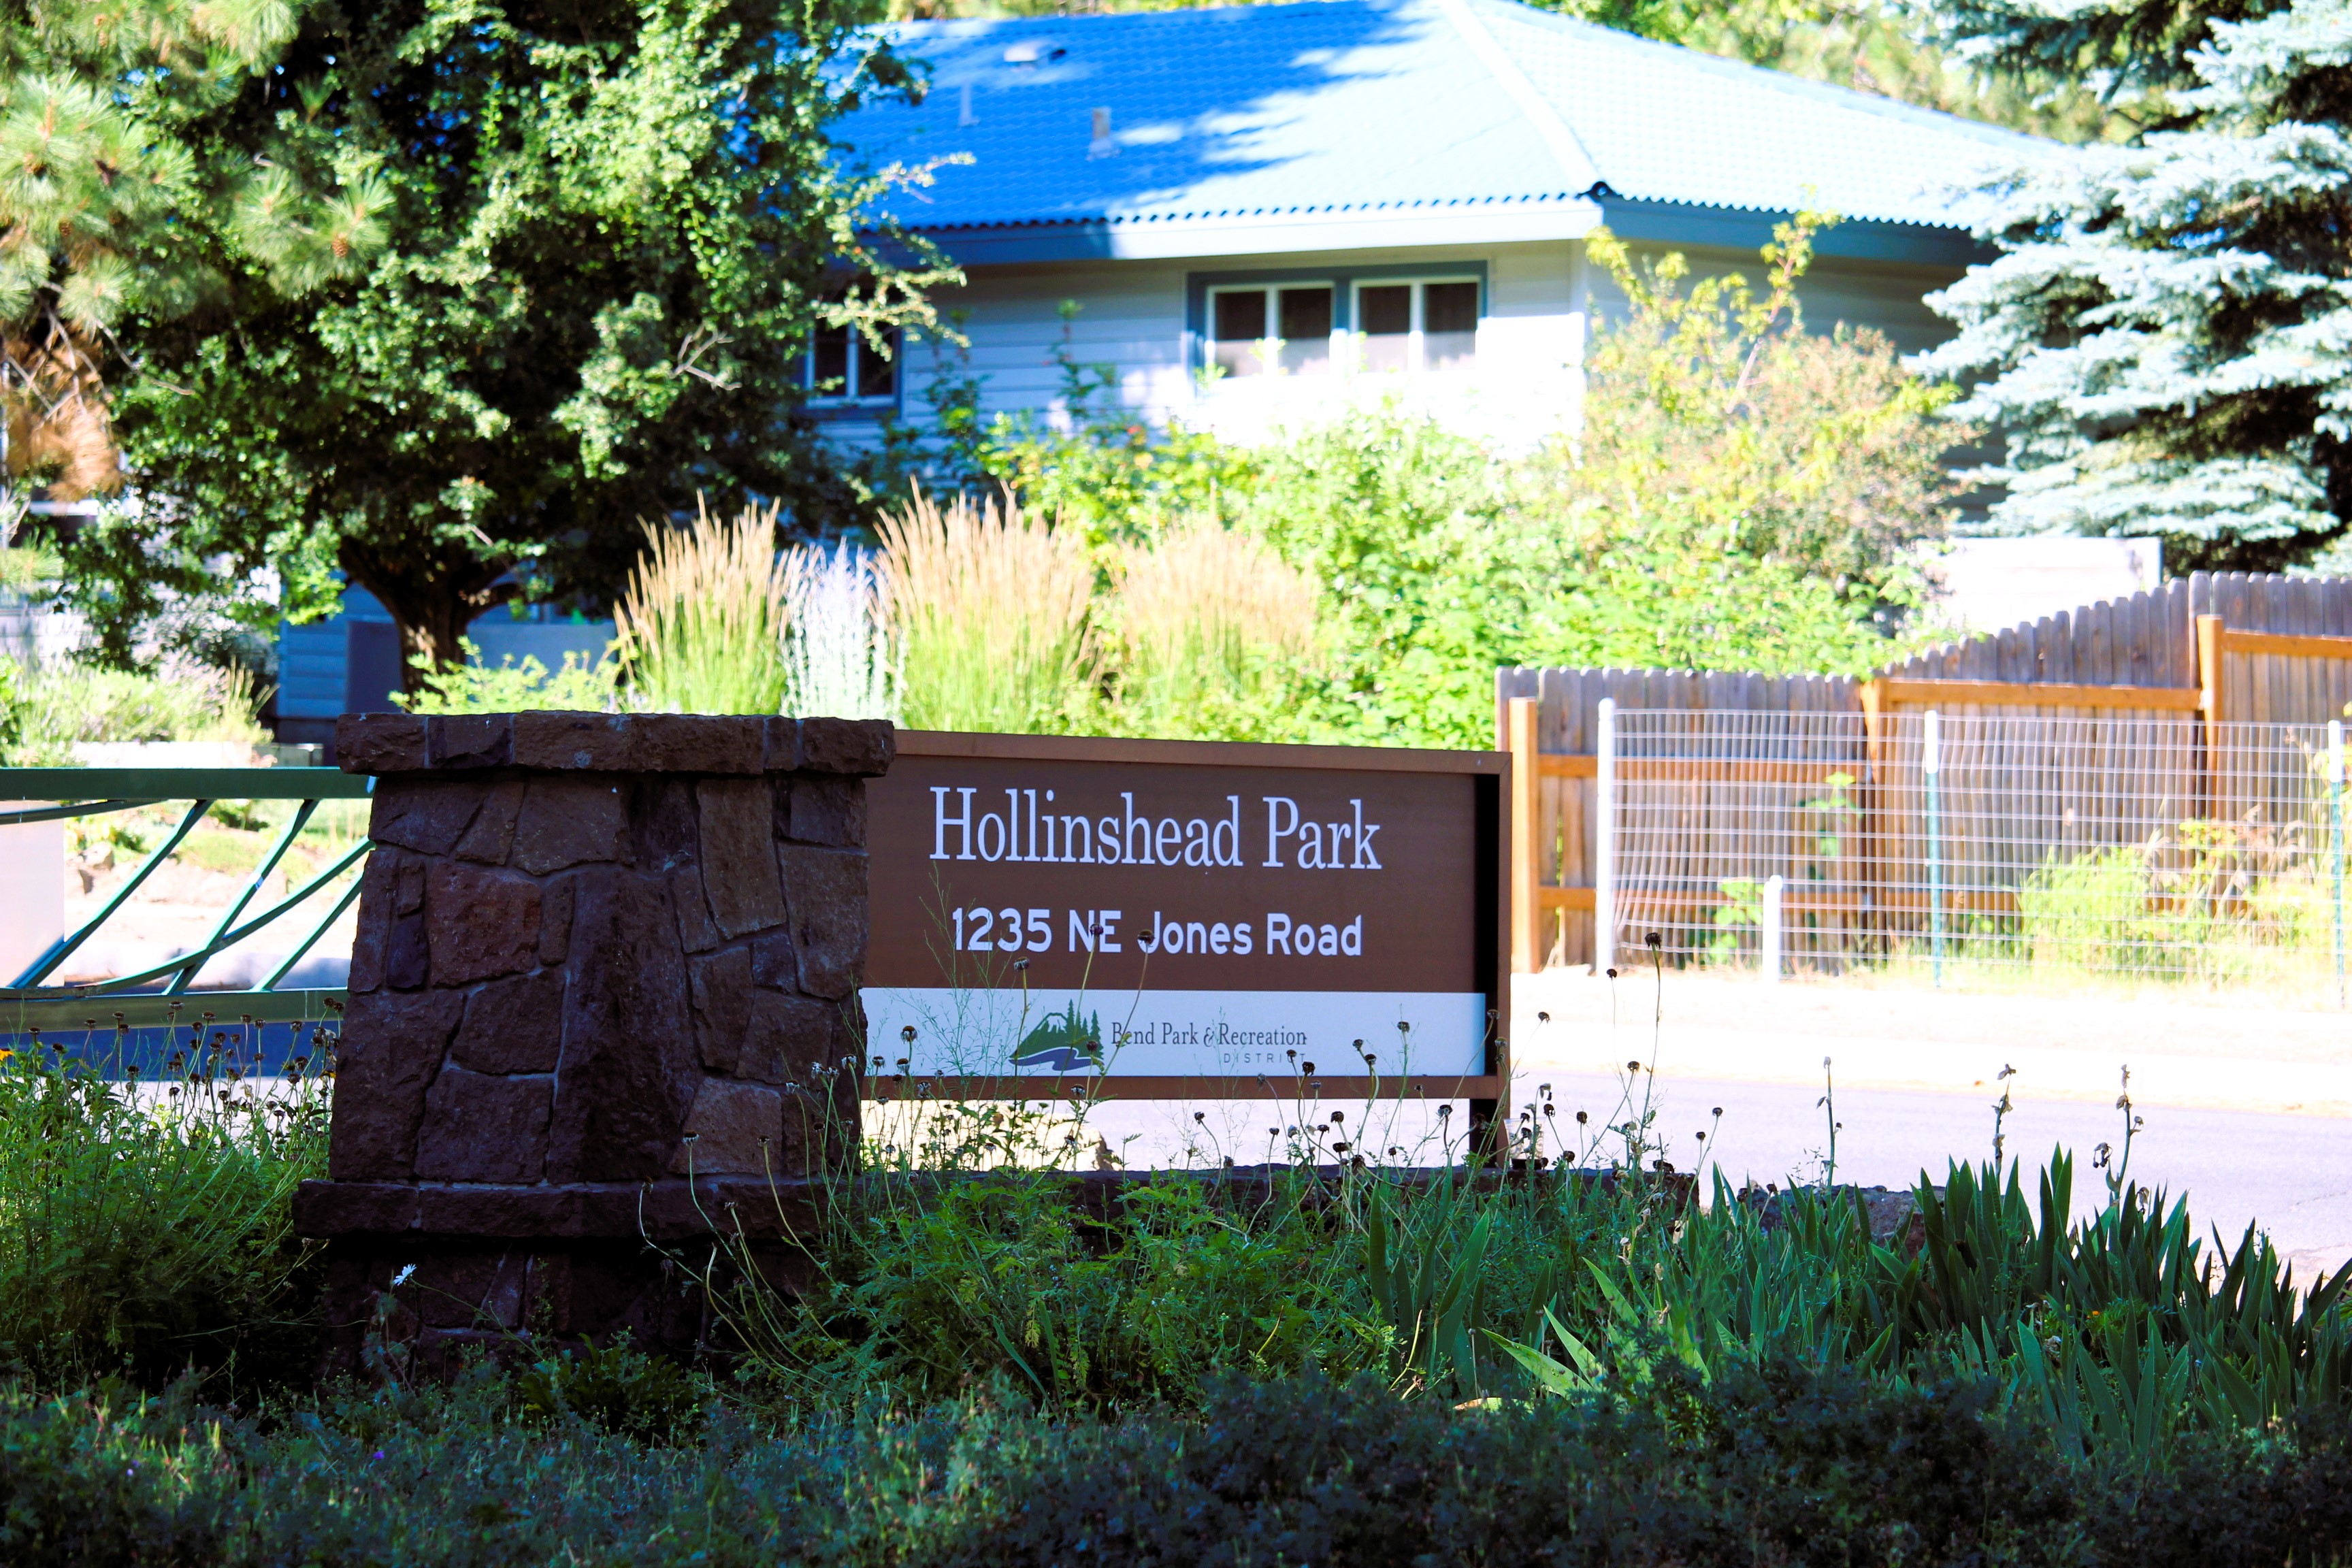 Hollinshead park entry sign